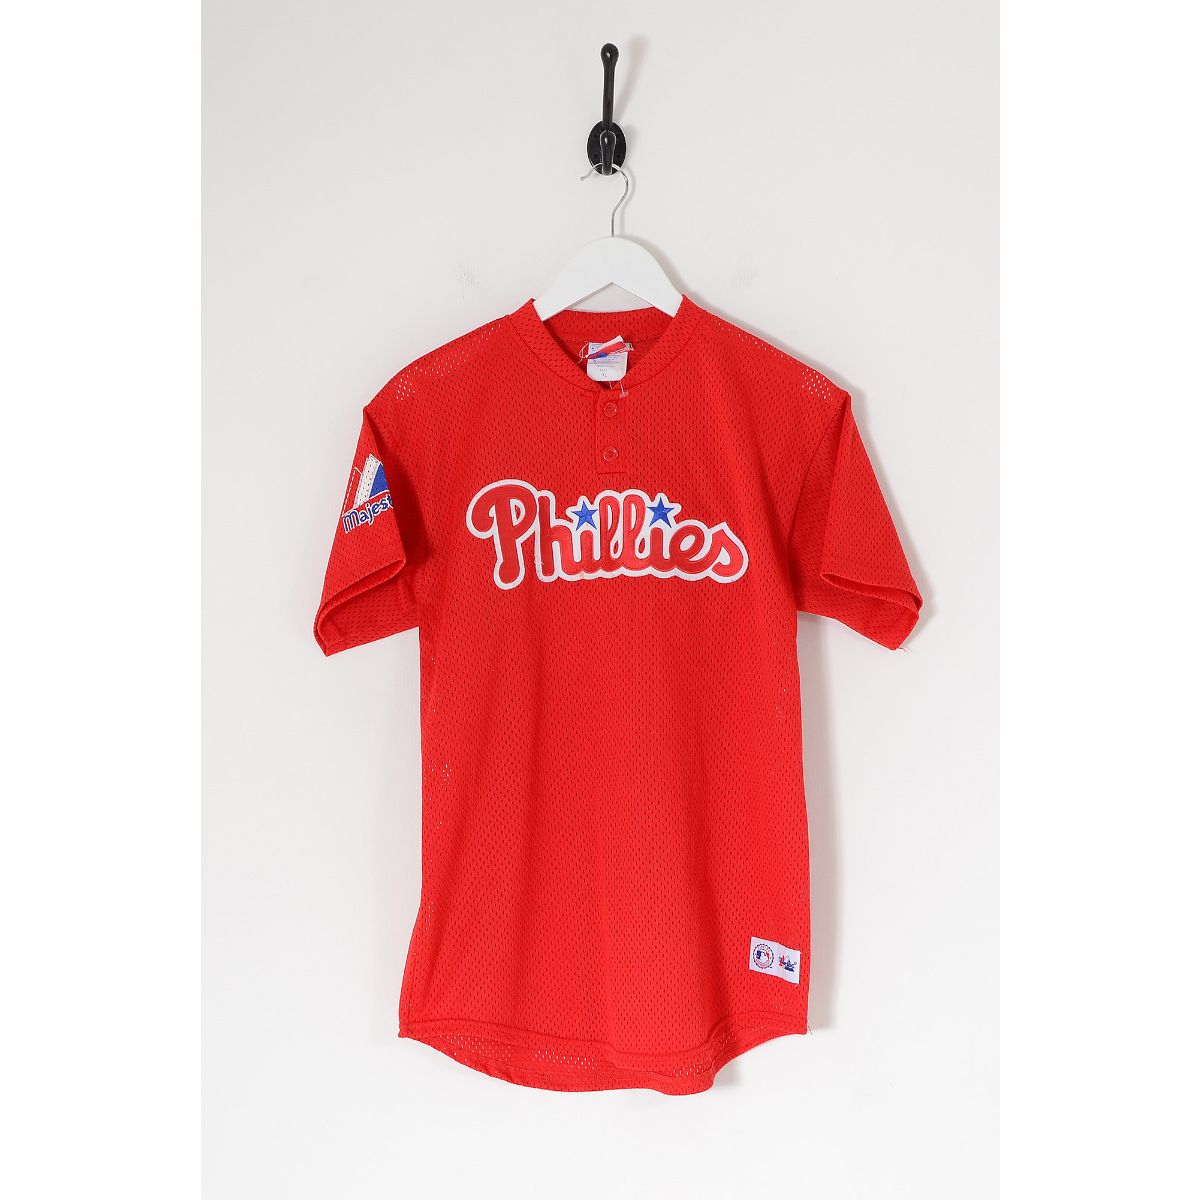 Vintage MLB Philadelphia Phillies Baseball Jersey Red XL